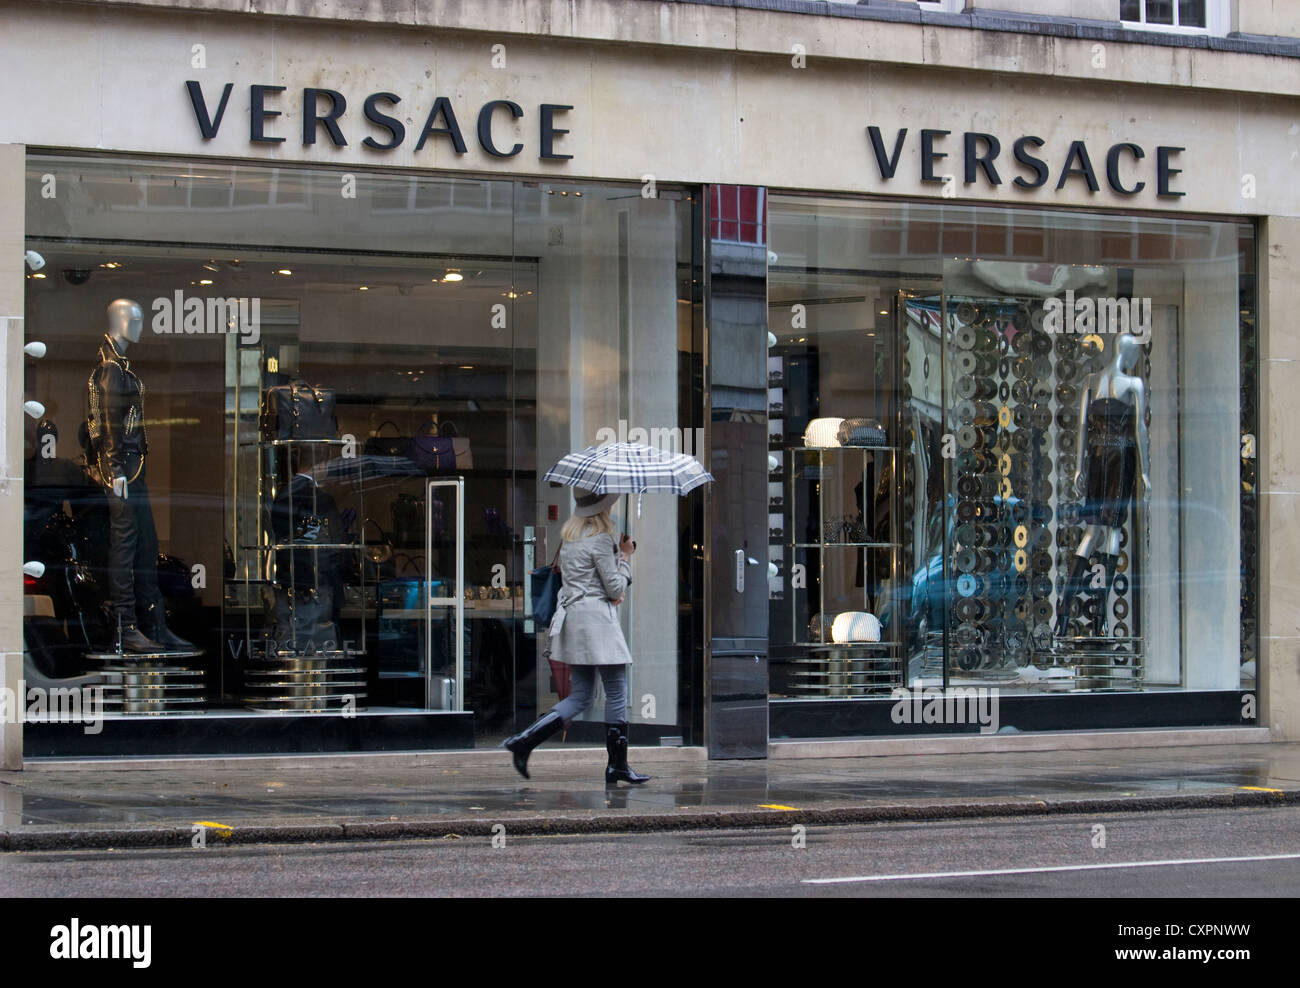 versace sloane street london